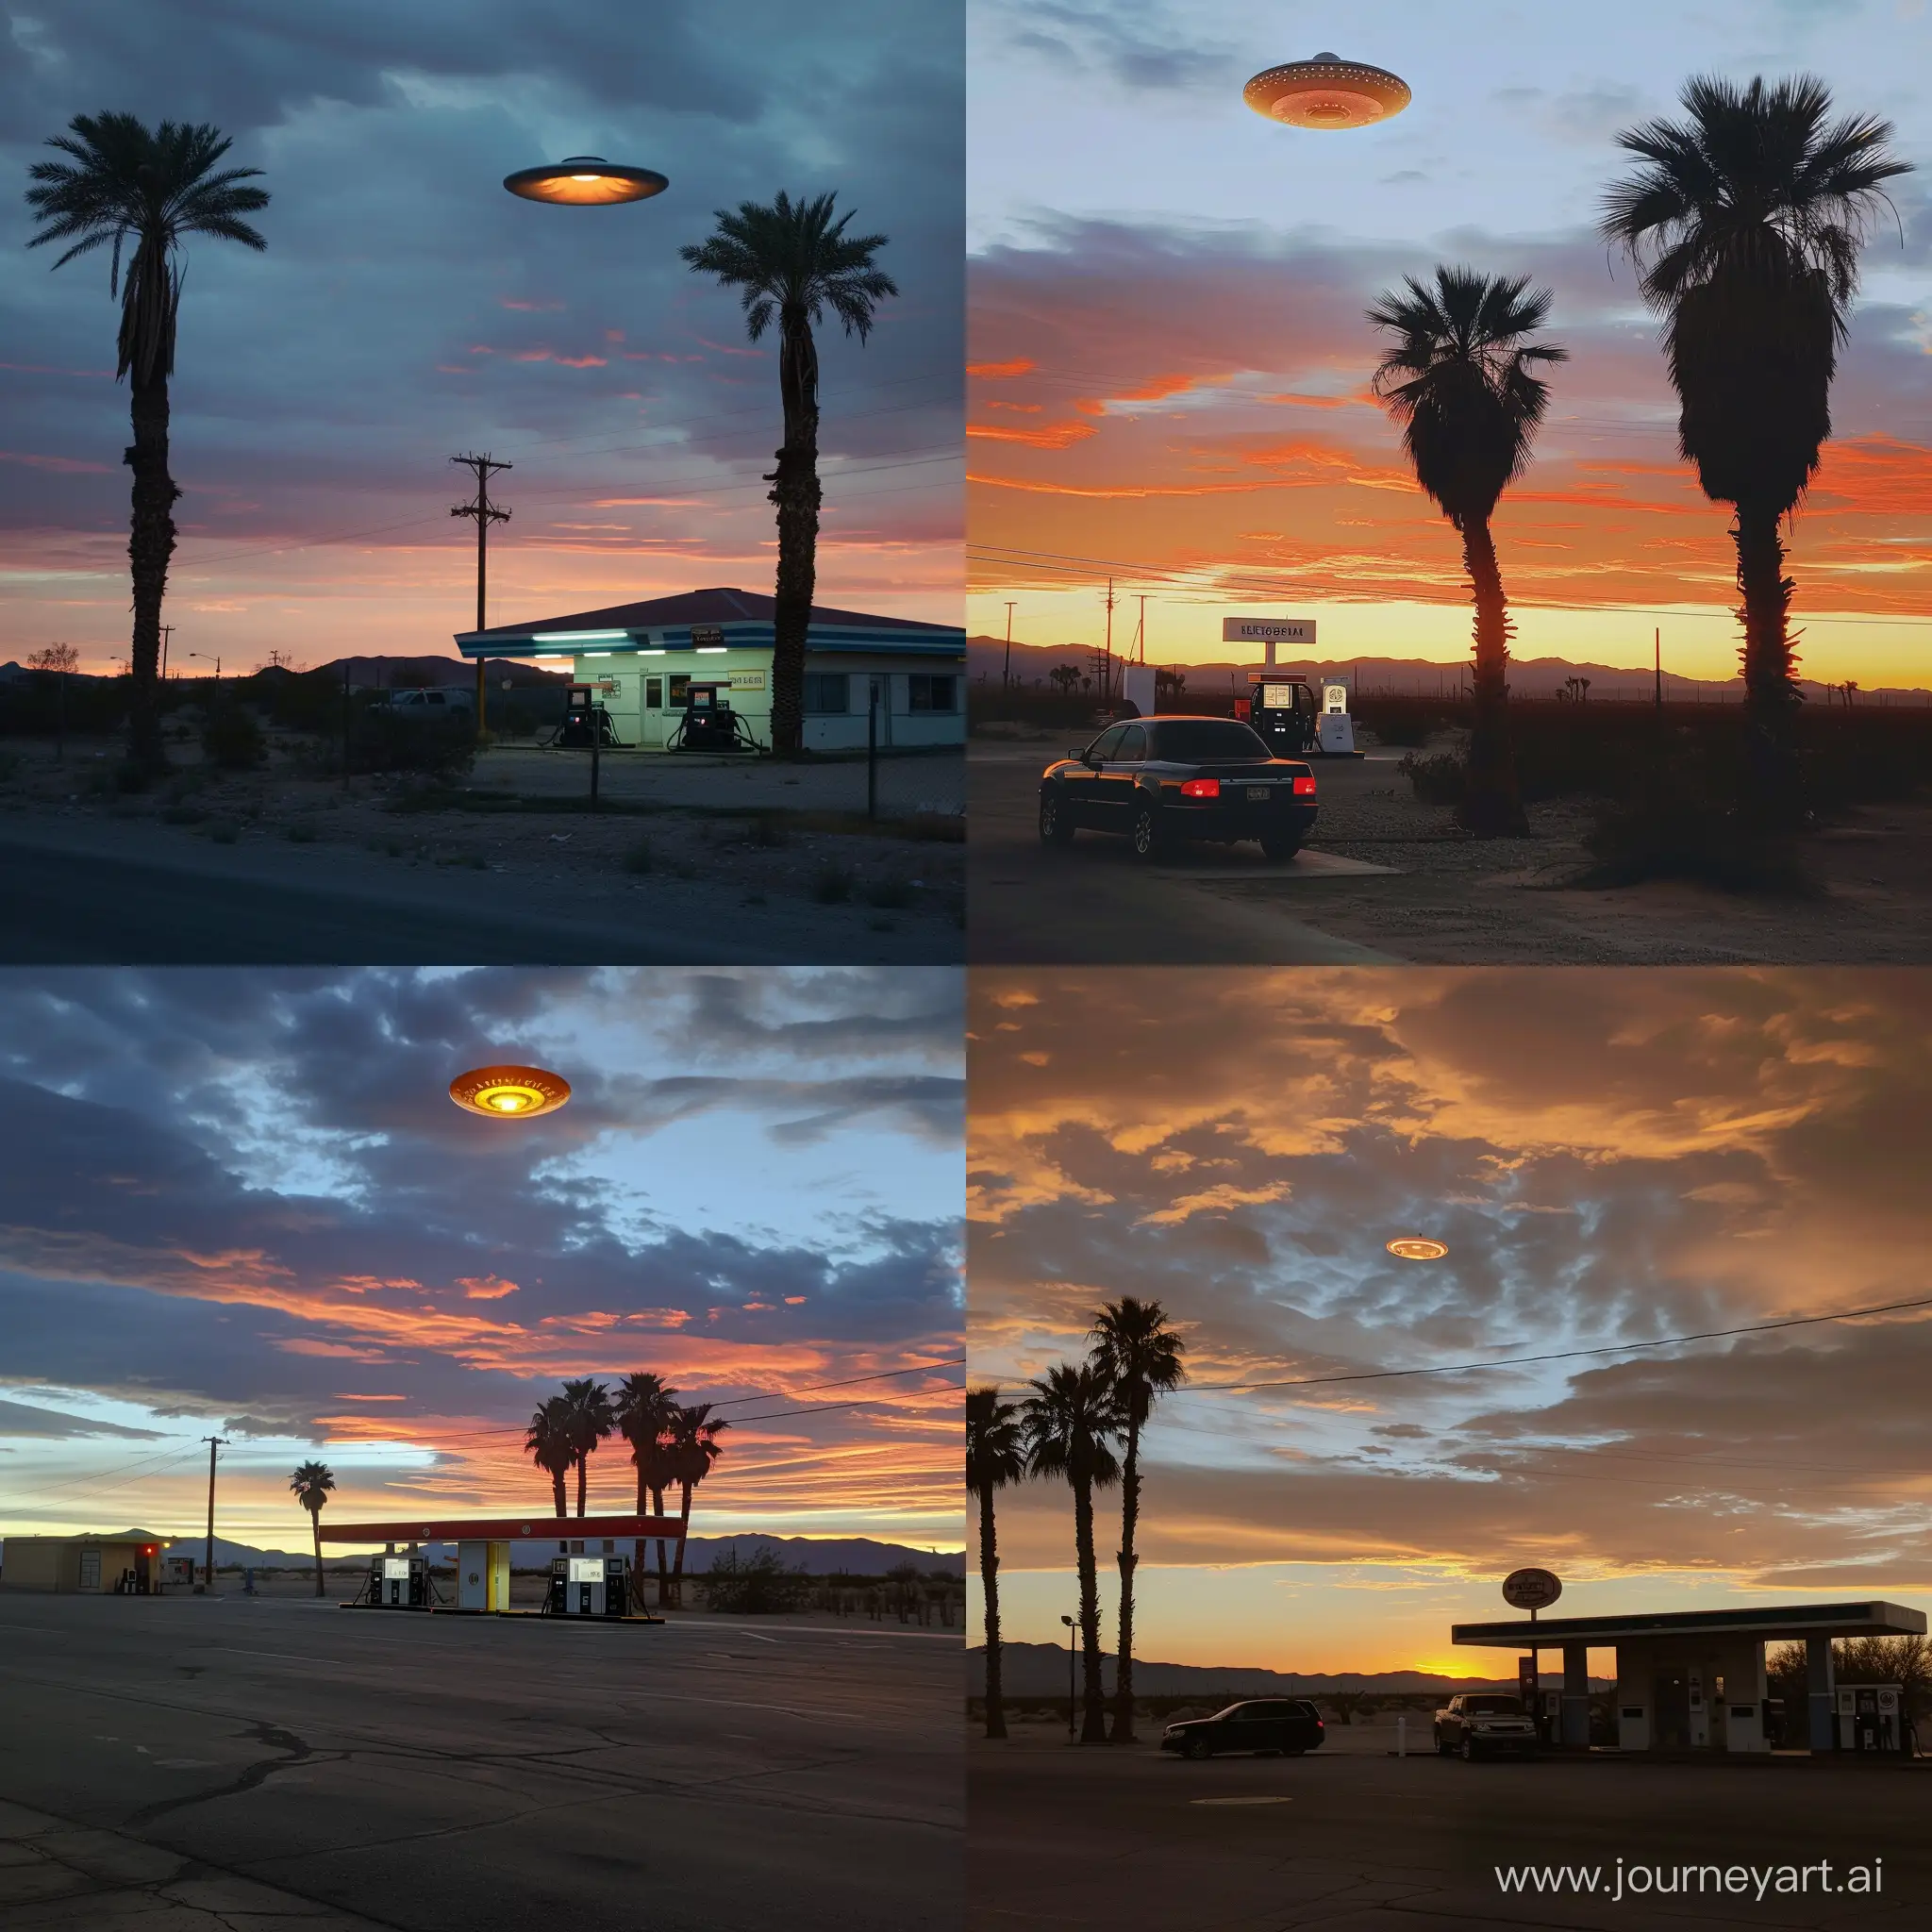 Desert gas station sunset aesthetic landscape little palms ufo above